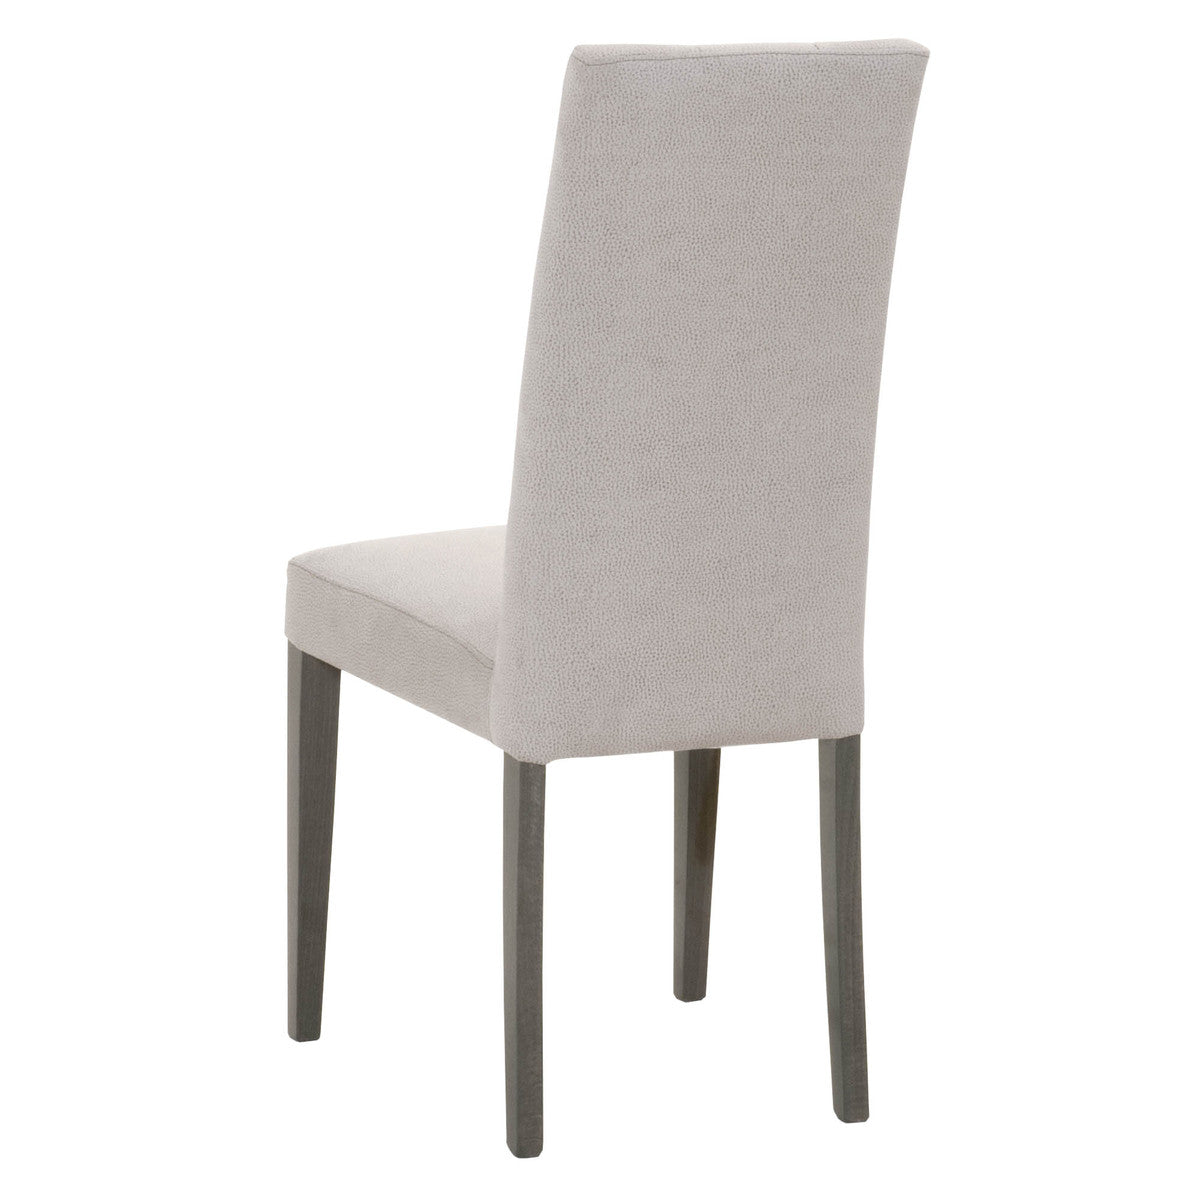 Dedham Dining Chair, set of 2